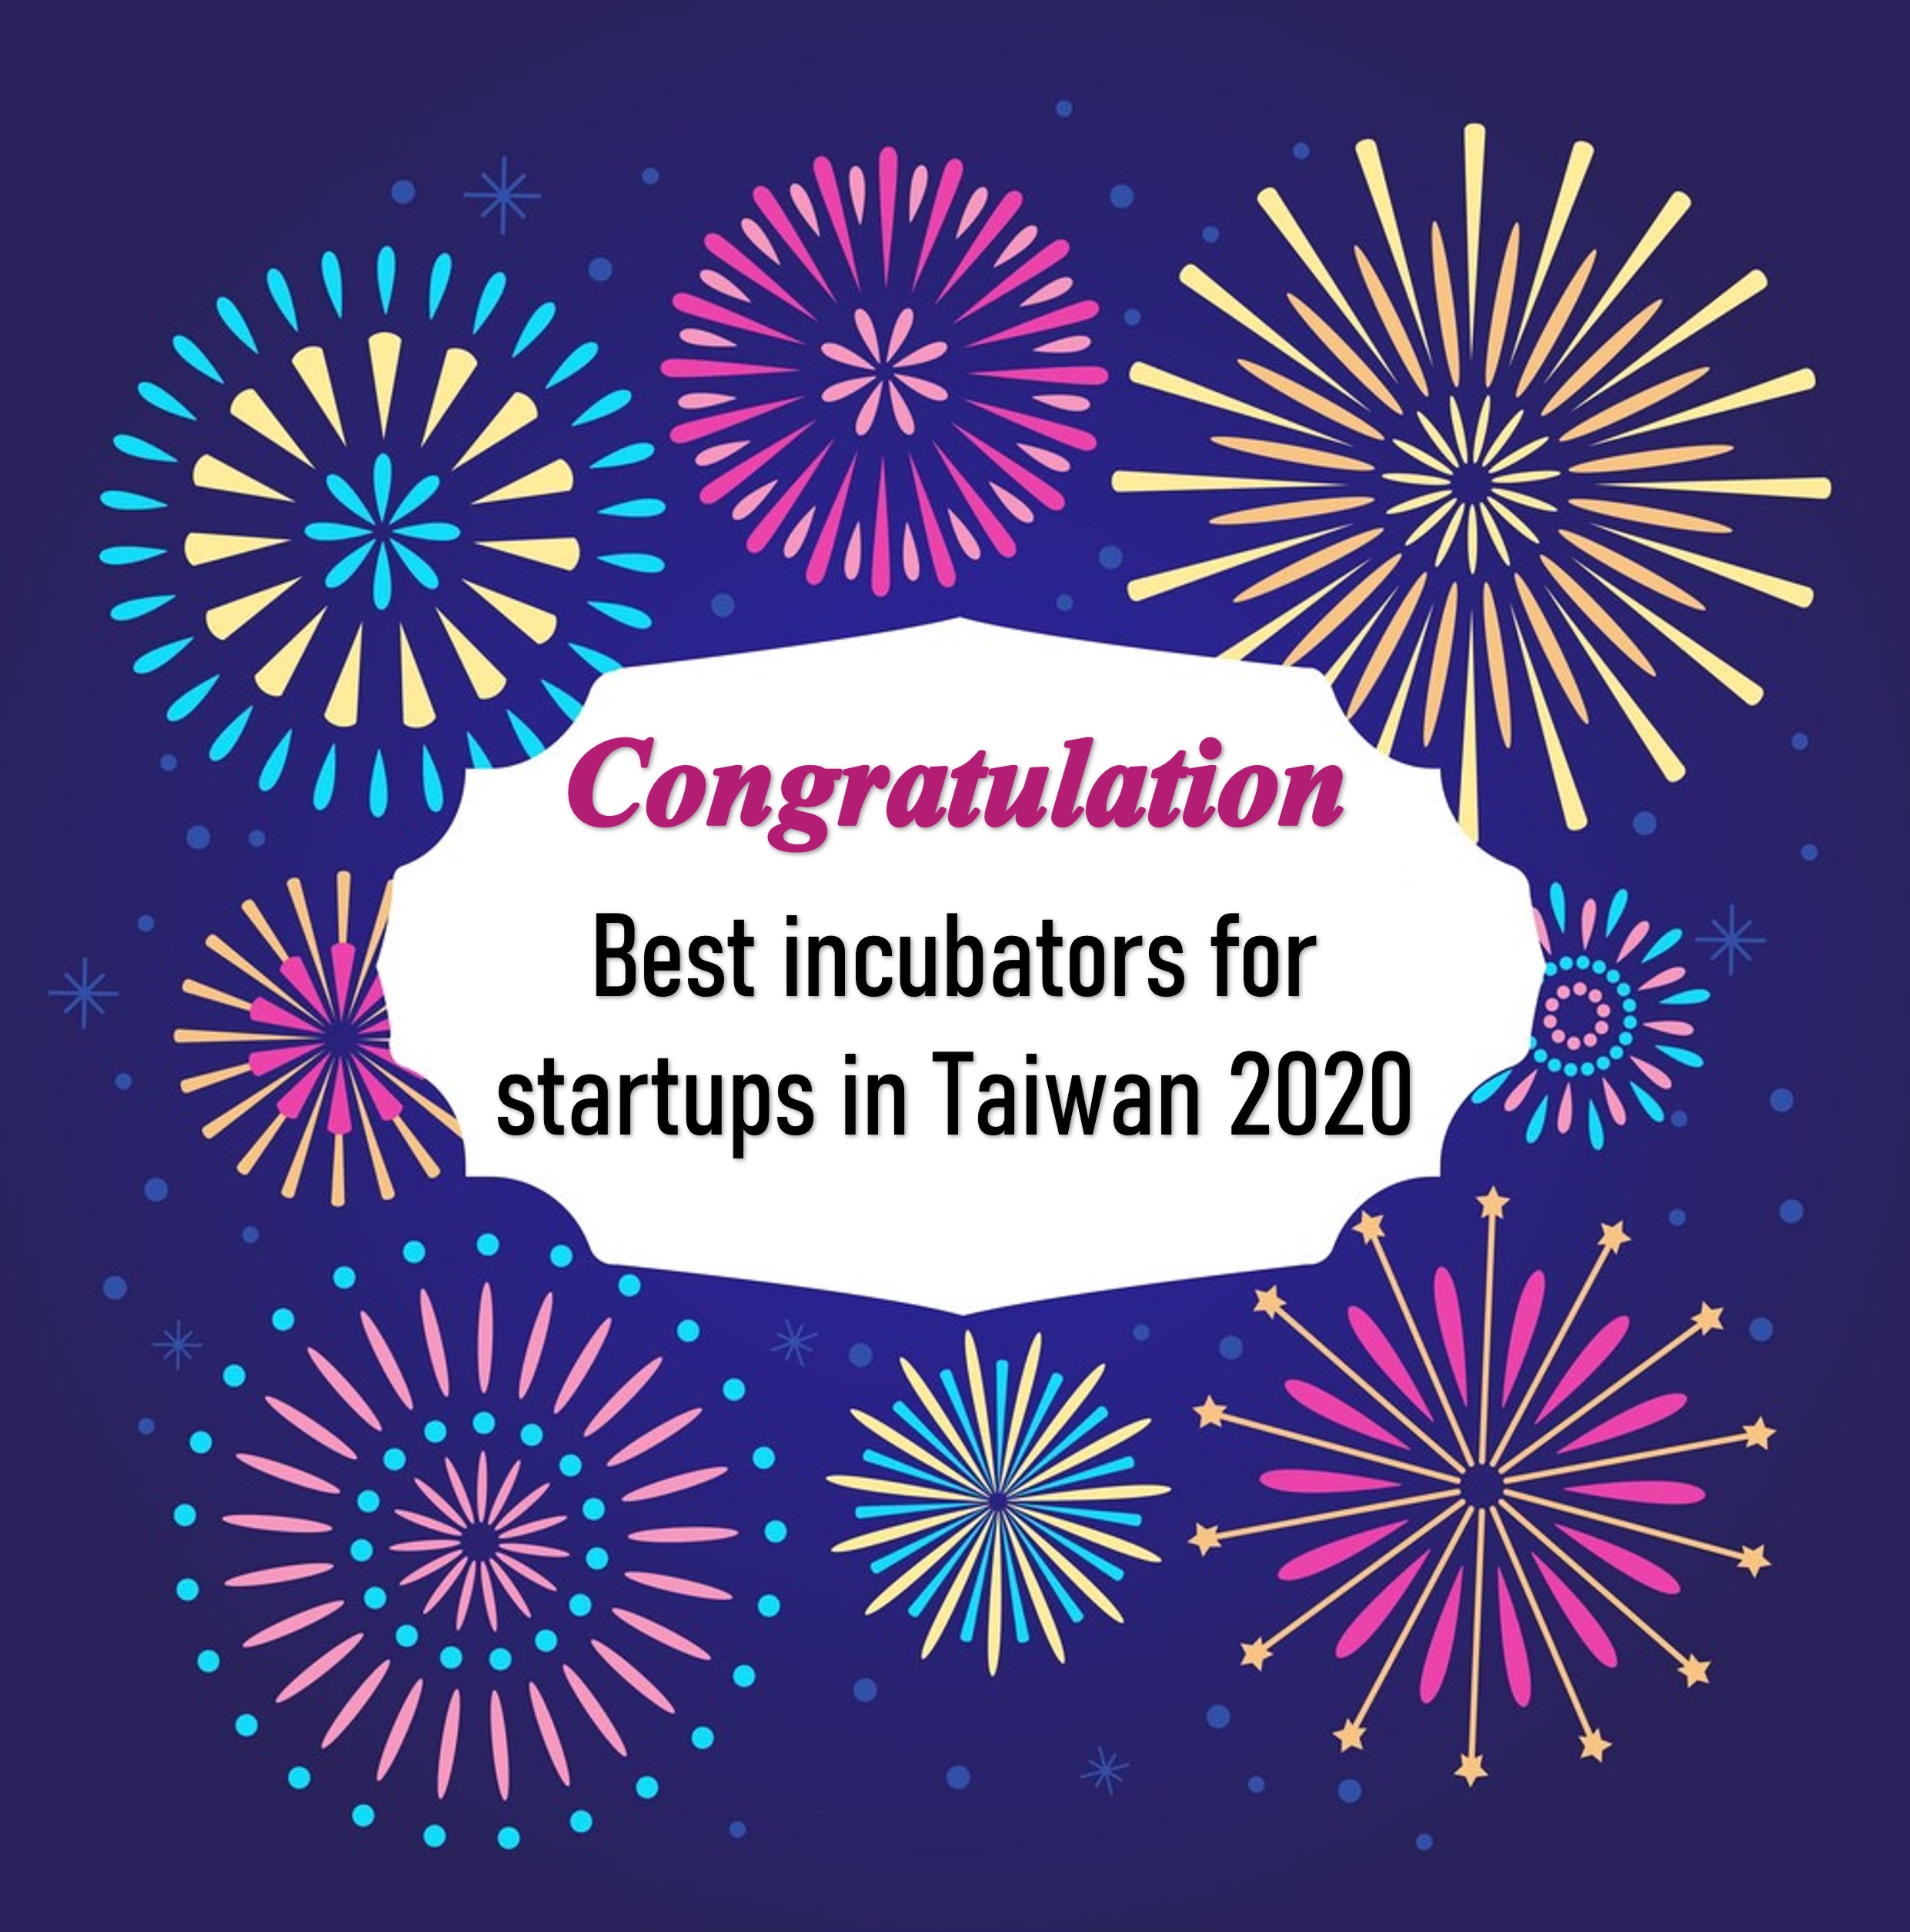 Congratulation Best incubators for startups in taiwan 2020